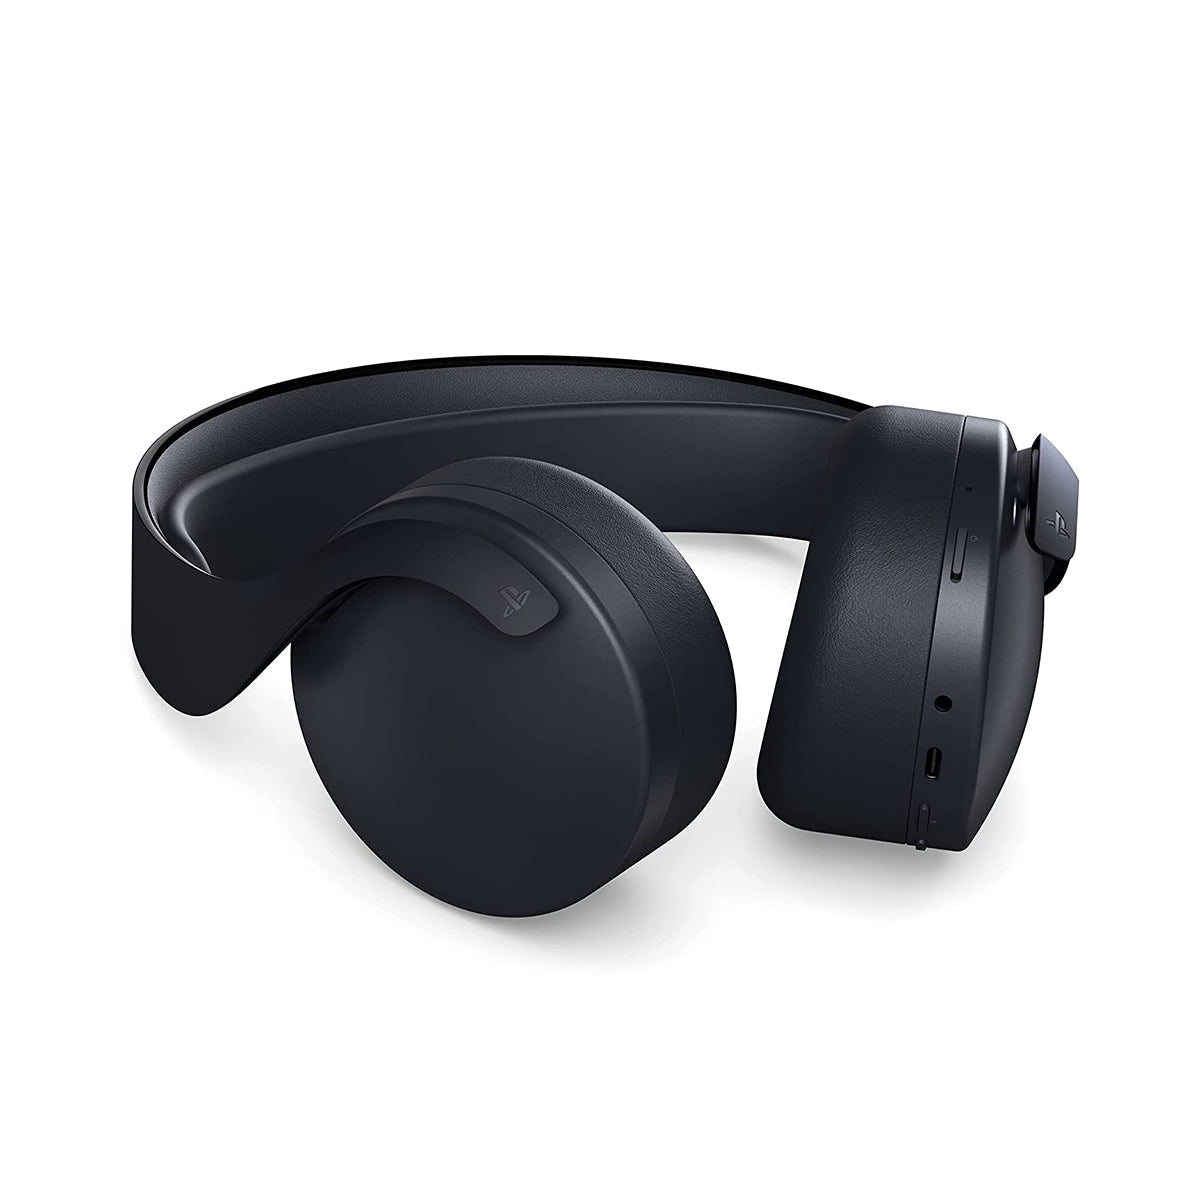 Sony PS5 Wireless Headphones Pulse 3D Midnight Black